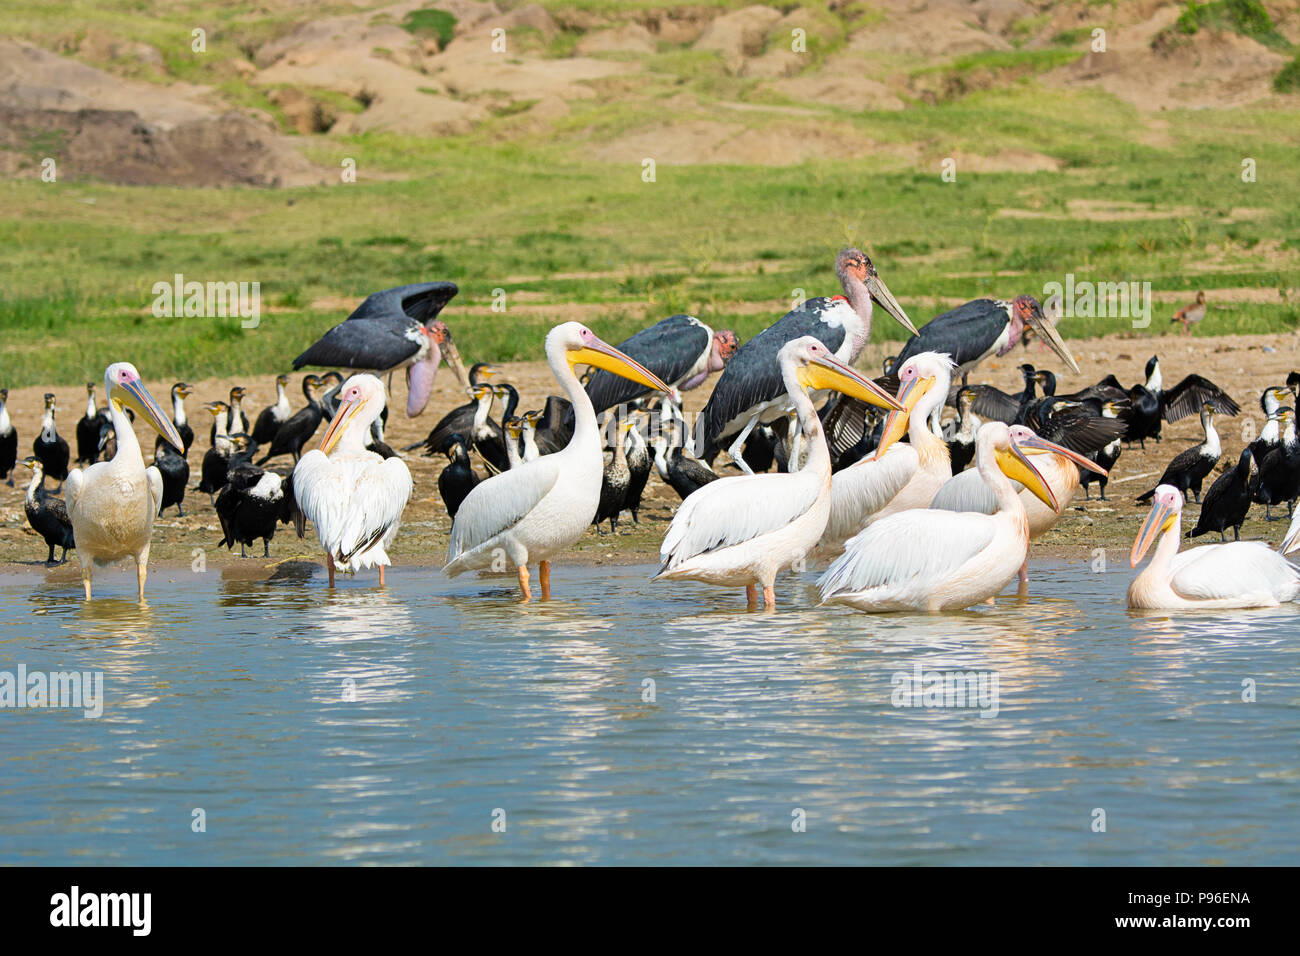 Great White Pelicans, Pelican, White Breasted Cormorant, Cormorants and Marabou Storks, Birds Kazinga Channel, Queen Elizabeth National Park, Uganda Stock Photo